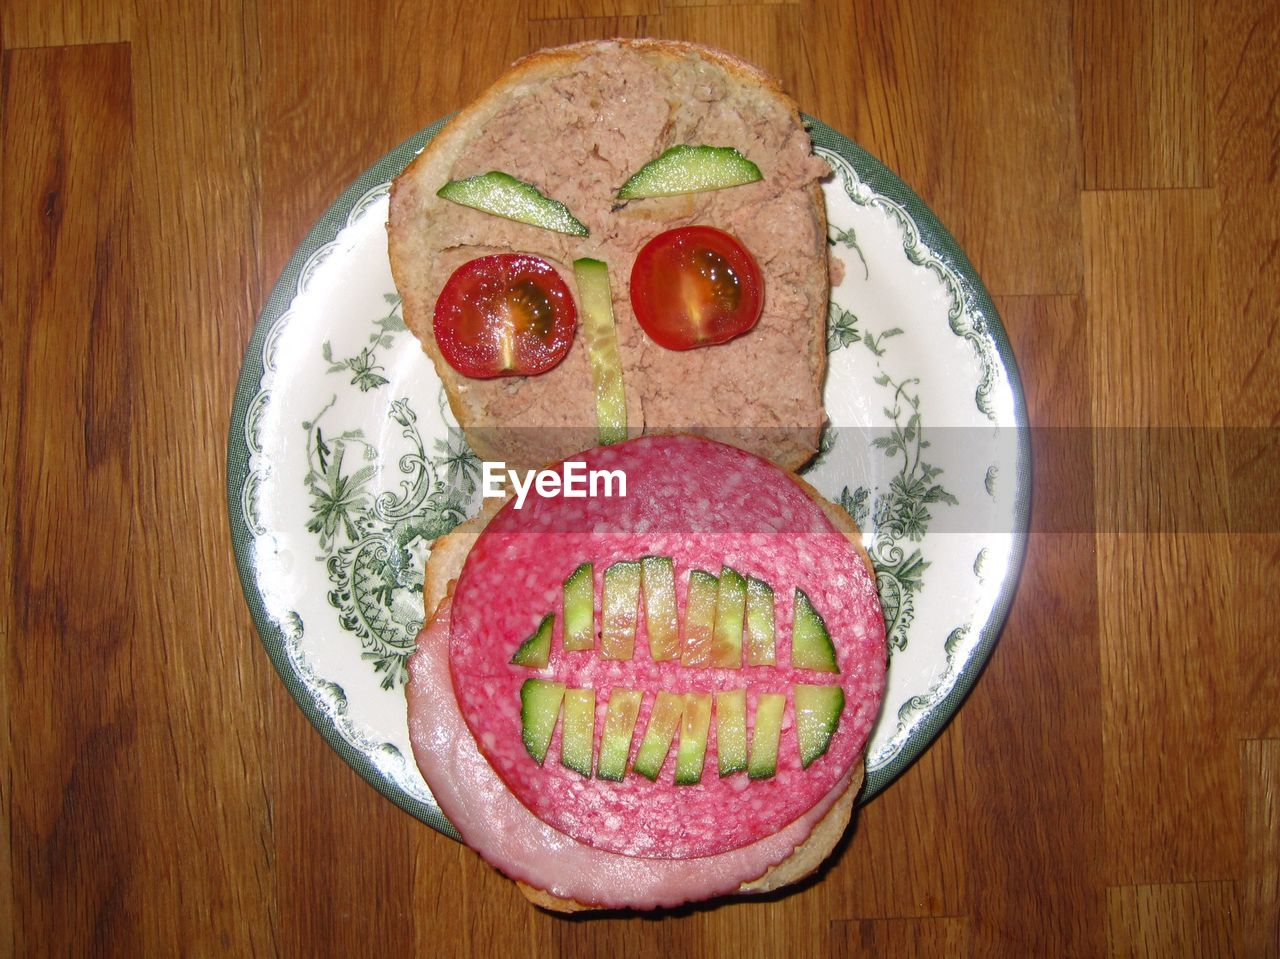 Anthropomorphic face on sandwich